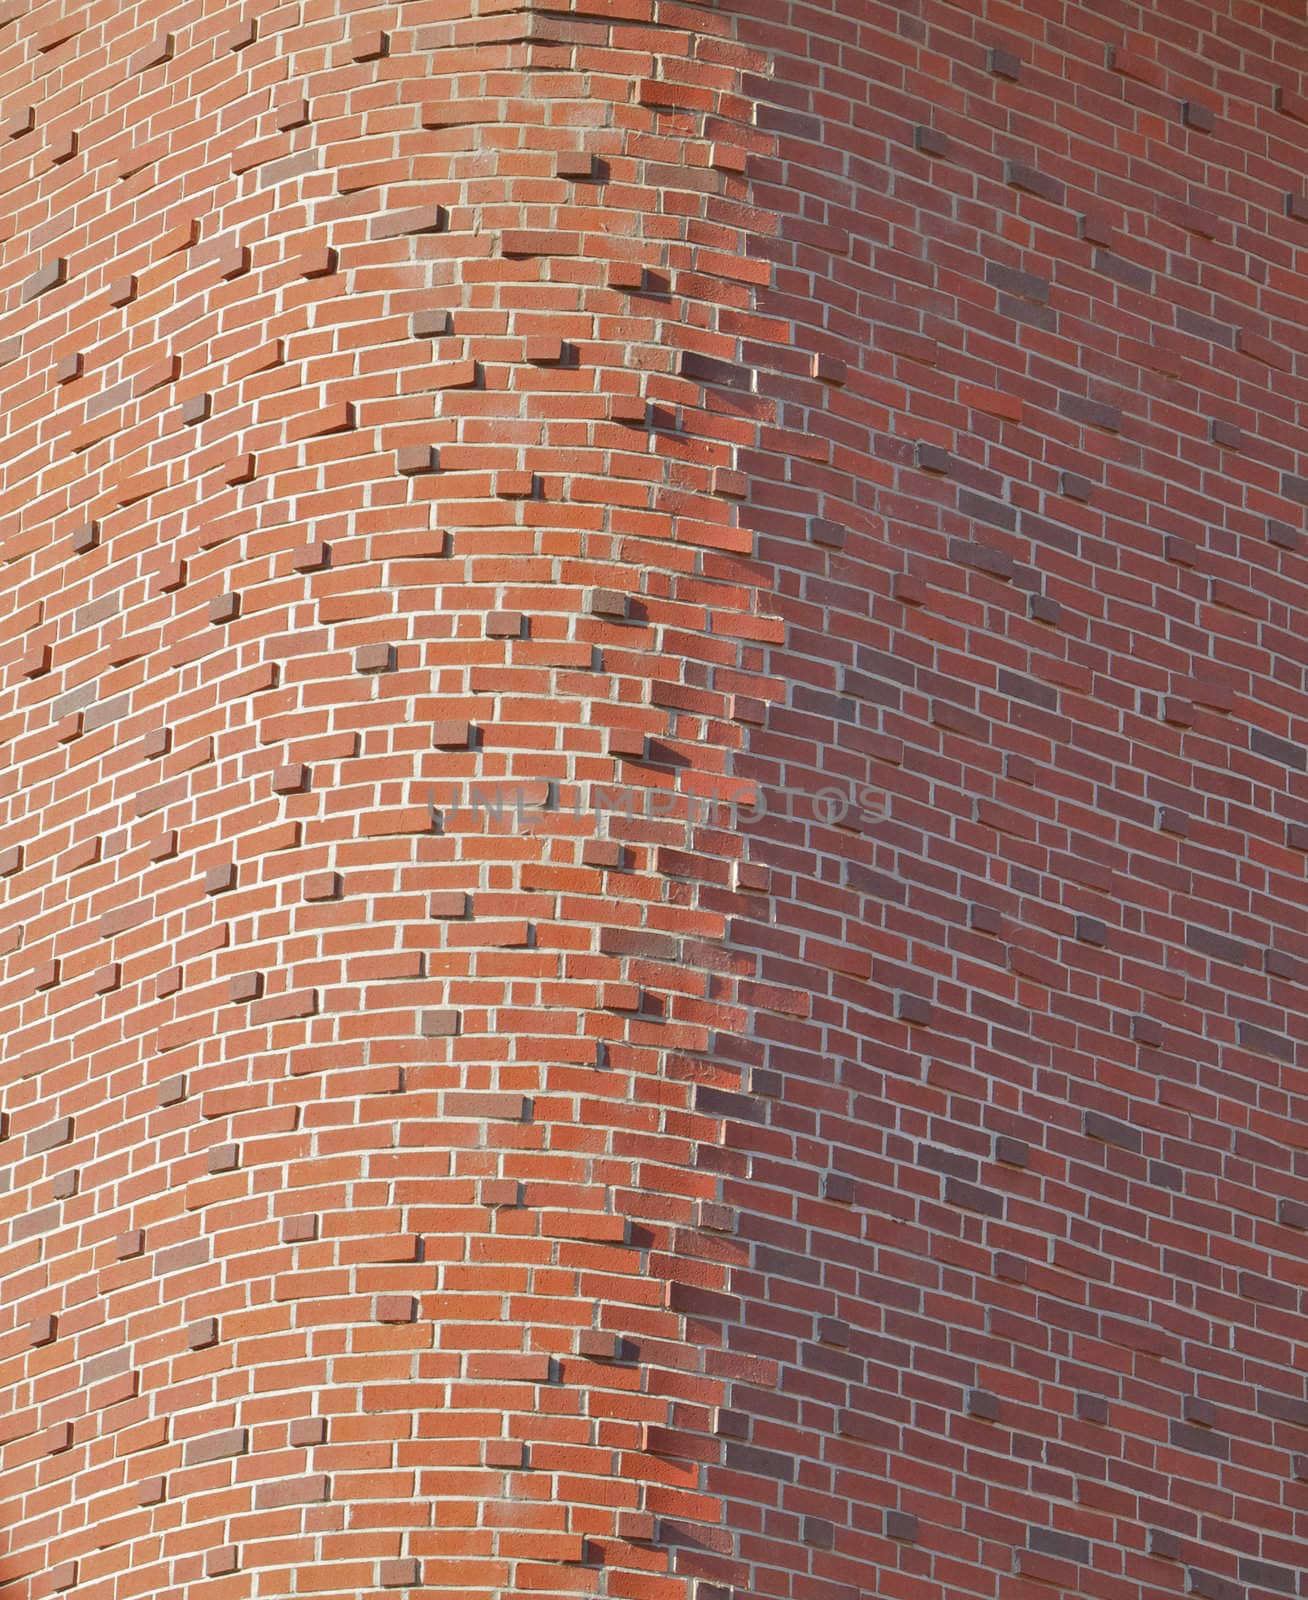 Round Brick Corner by bobkeenan